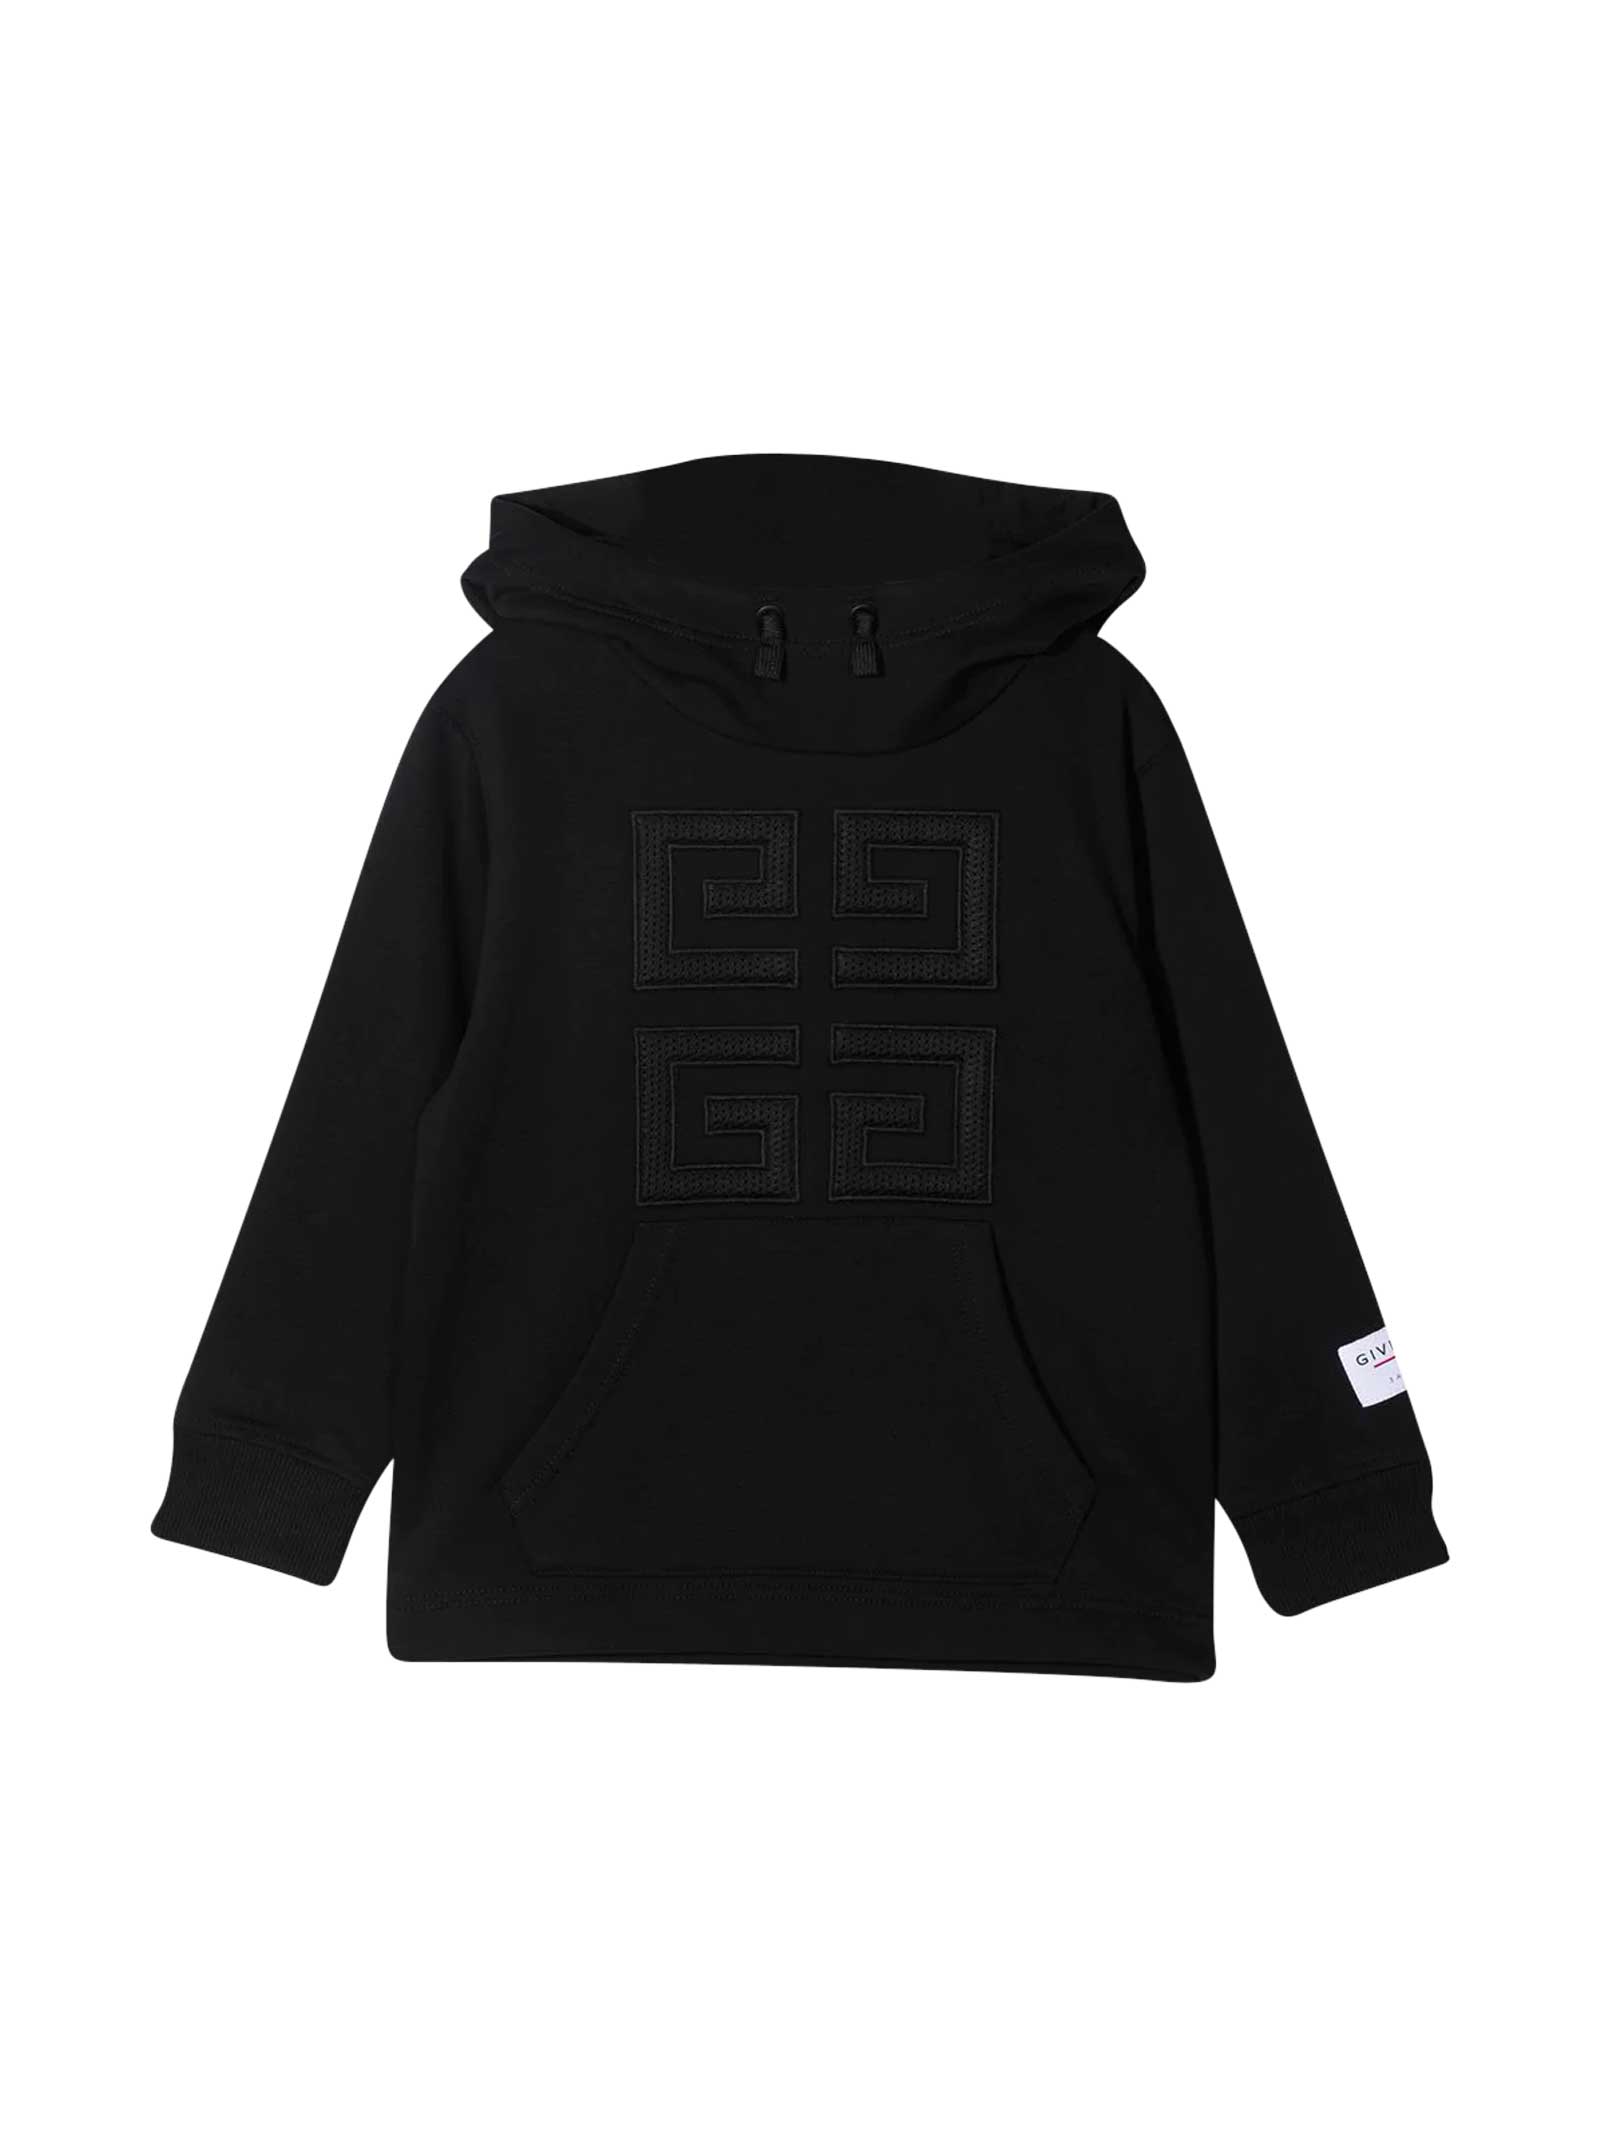 Givenchy Black Sweatshirt With Hood